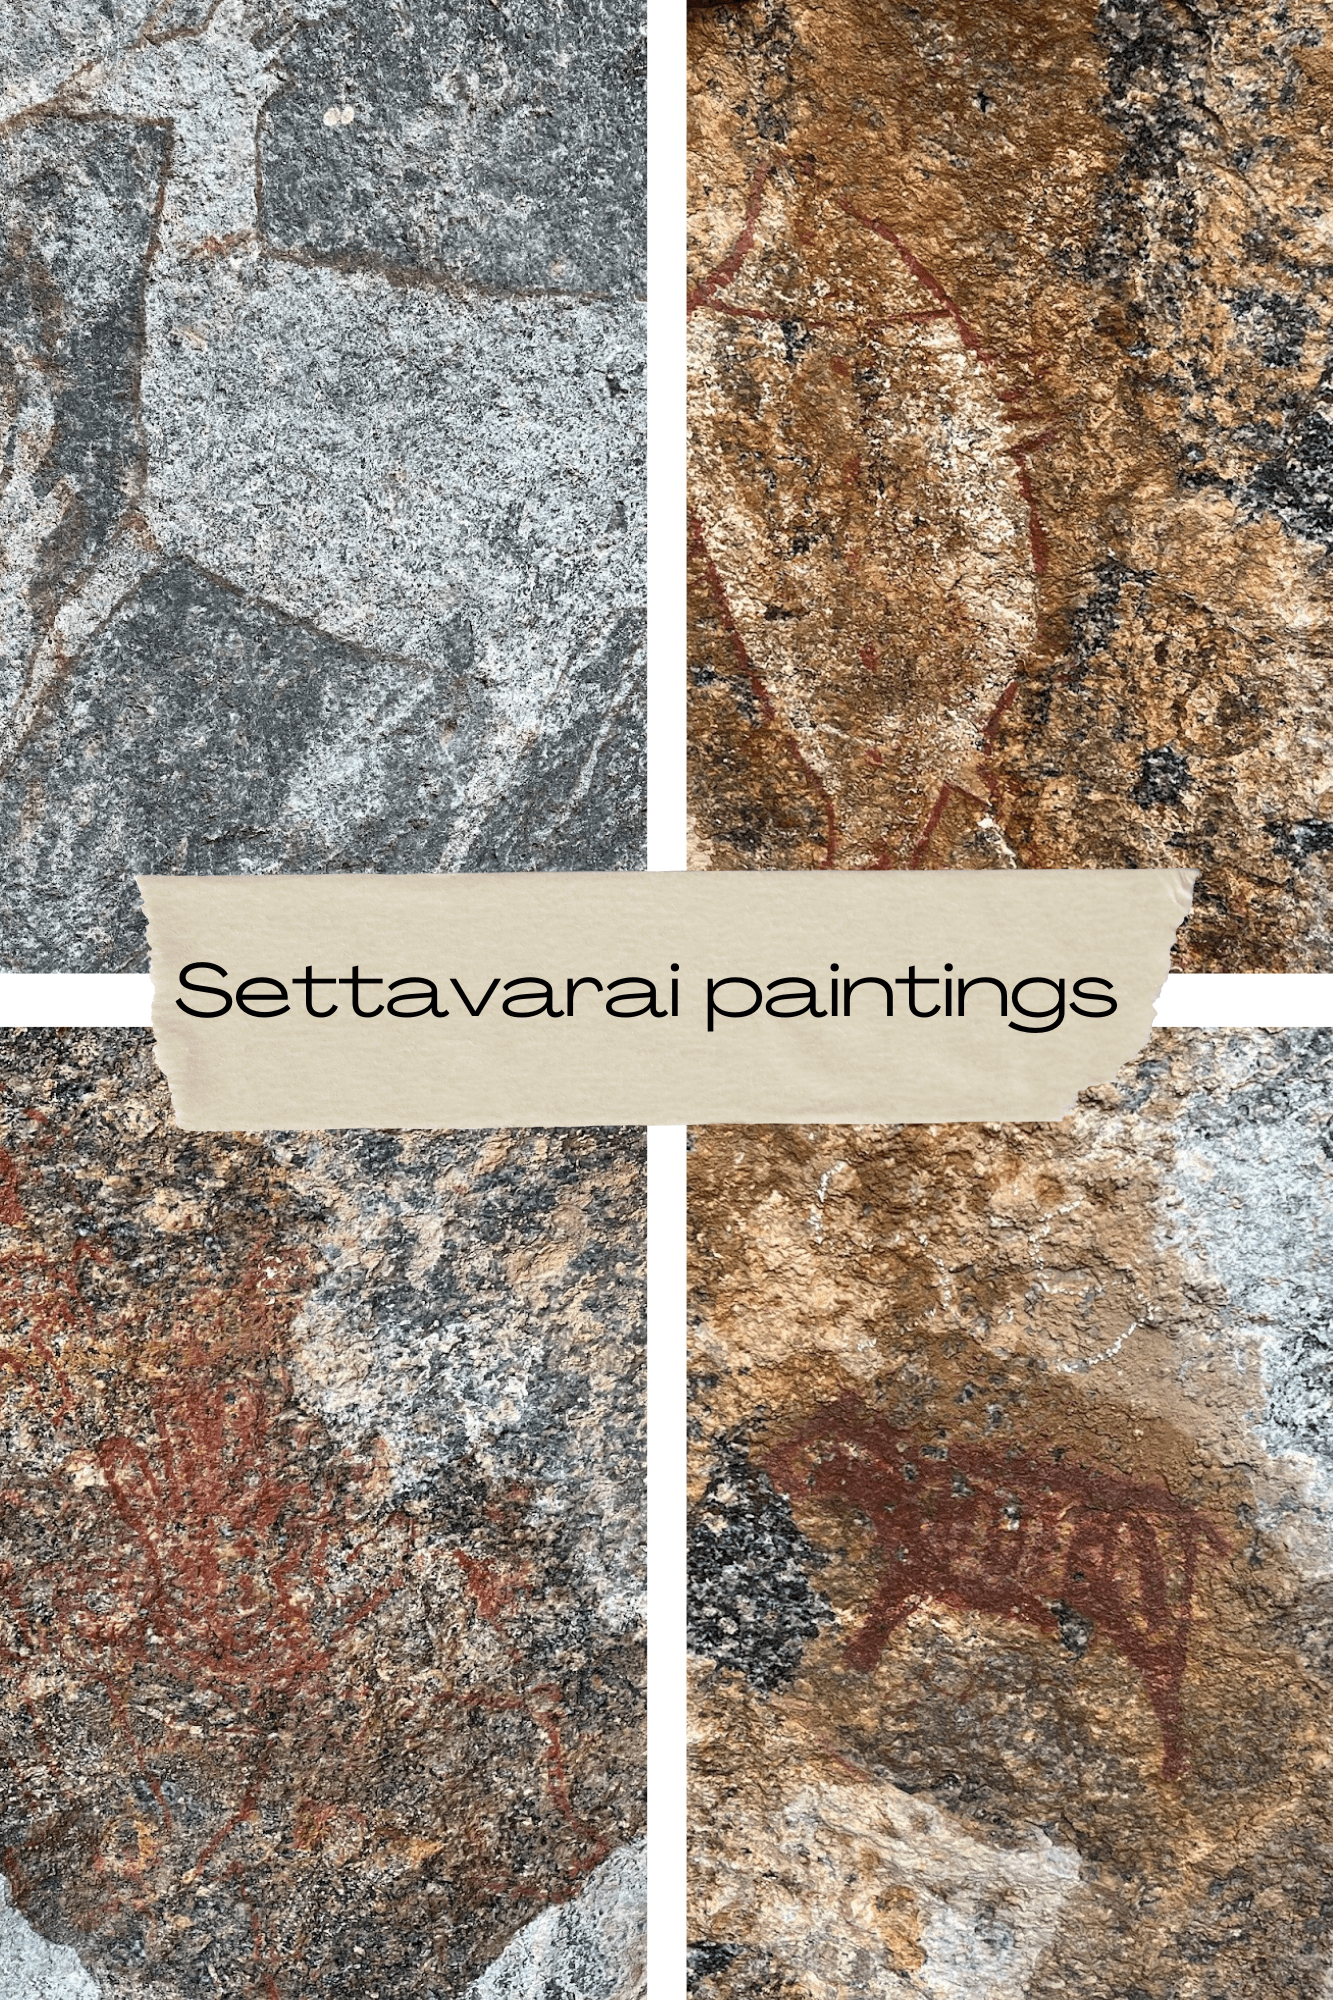 Settavarai – 3000 year old “Rock Paintings”